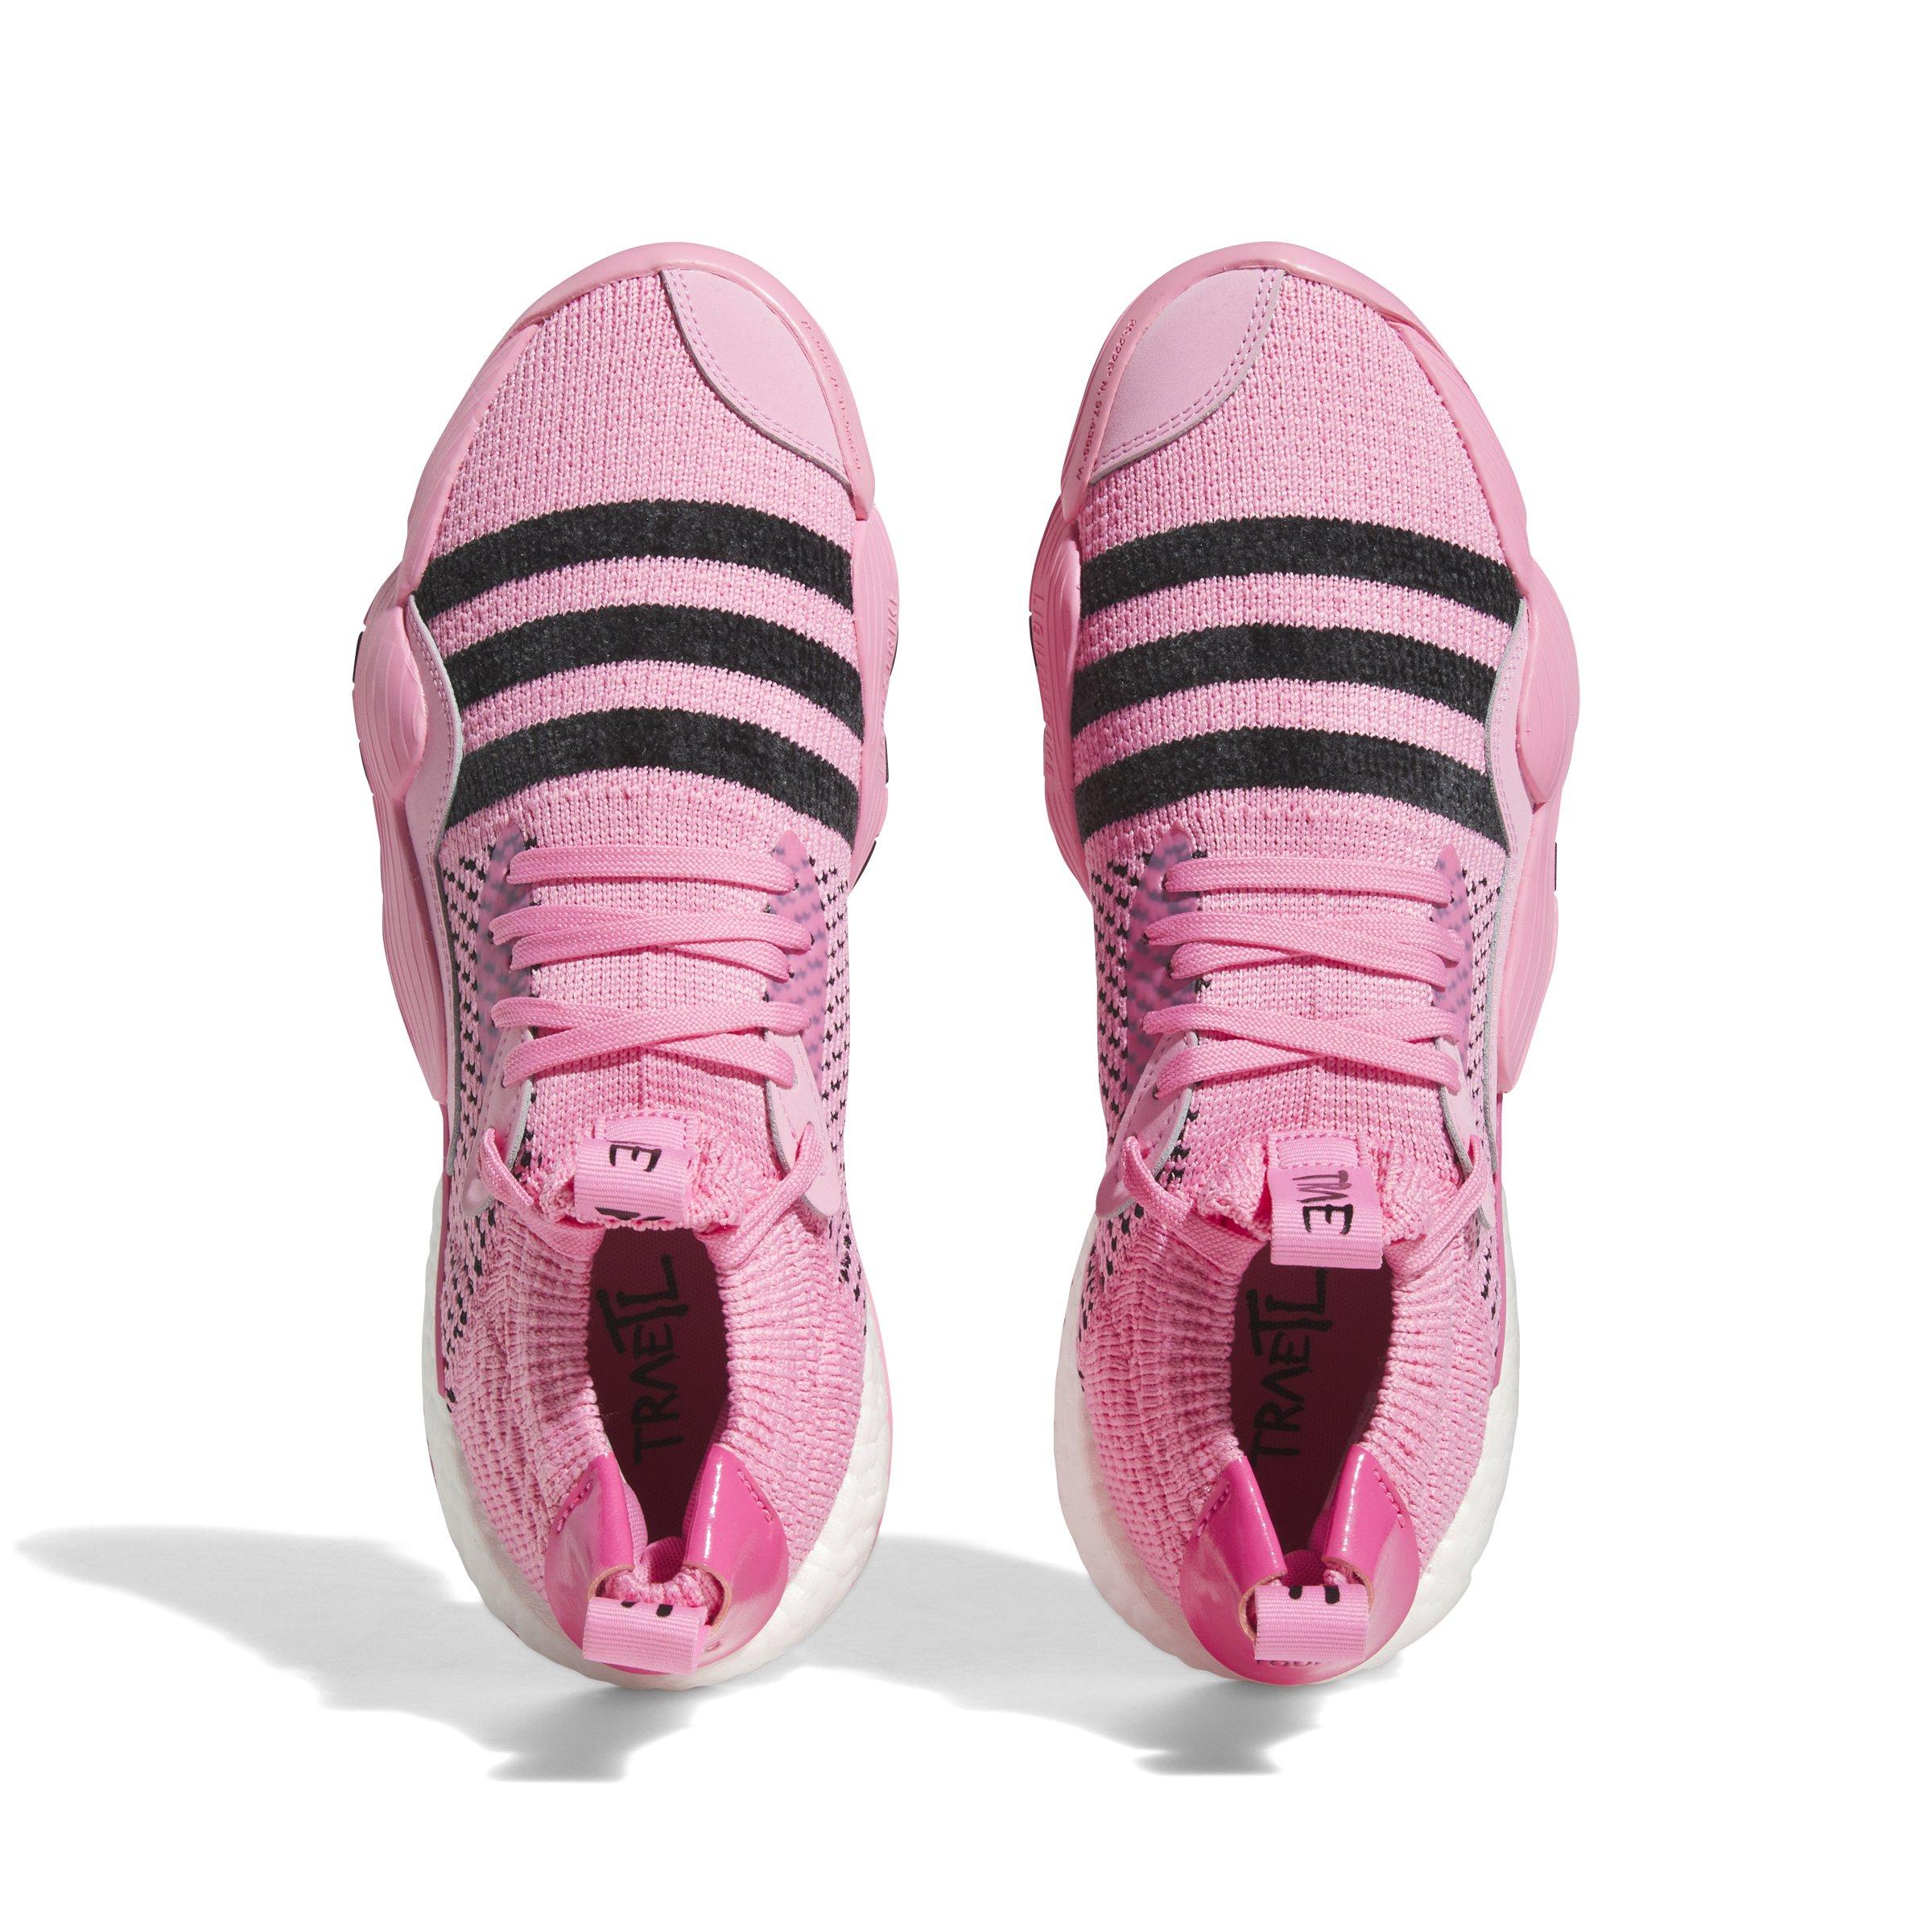 Adidas Trae Young 2 Basketball Shoes